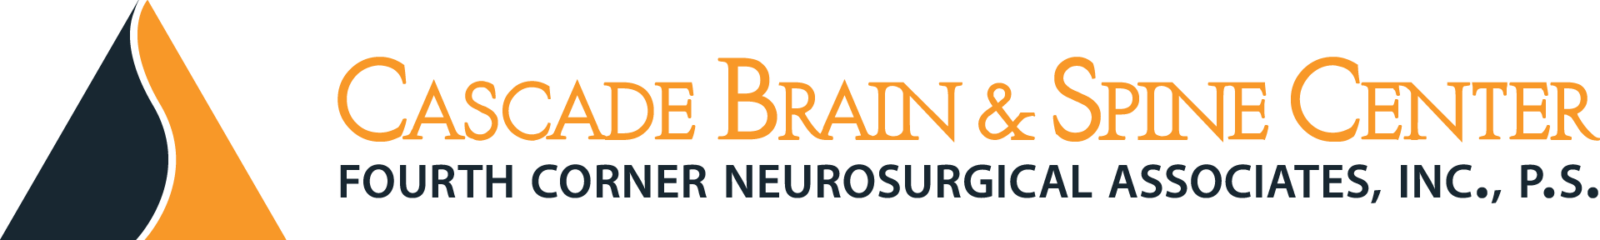 Fourth Corner Neurosurgical Associates Logo